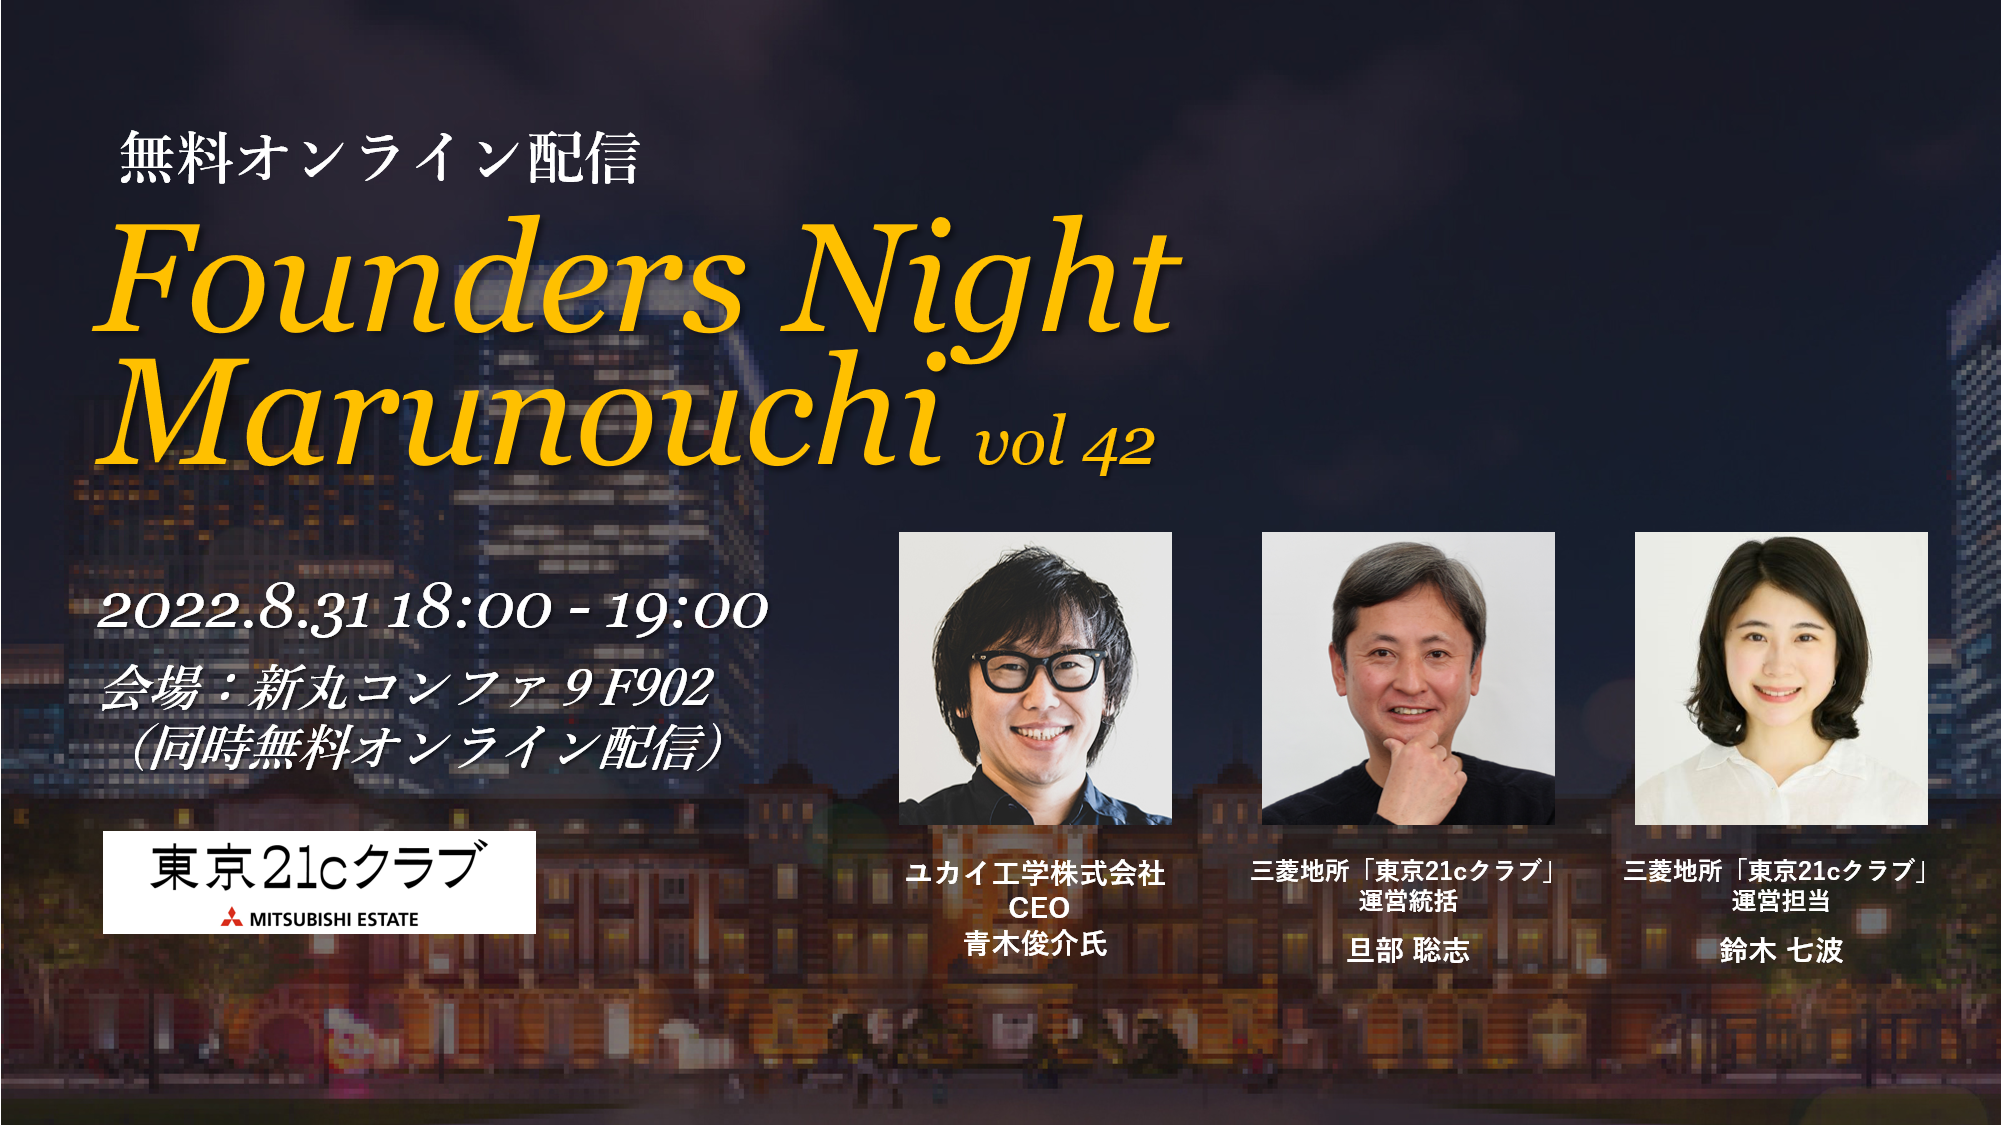 Founders Night Marunouchi #42<br>ユカイ工学株式会社 CEO 青木俊介さん編<br>2022/8/31 会場参加・オンライン